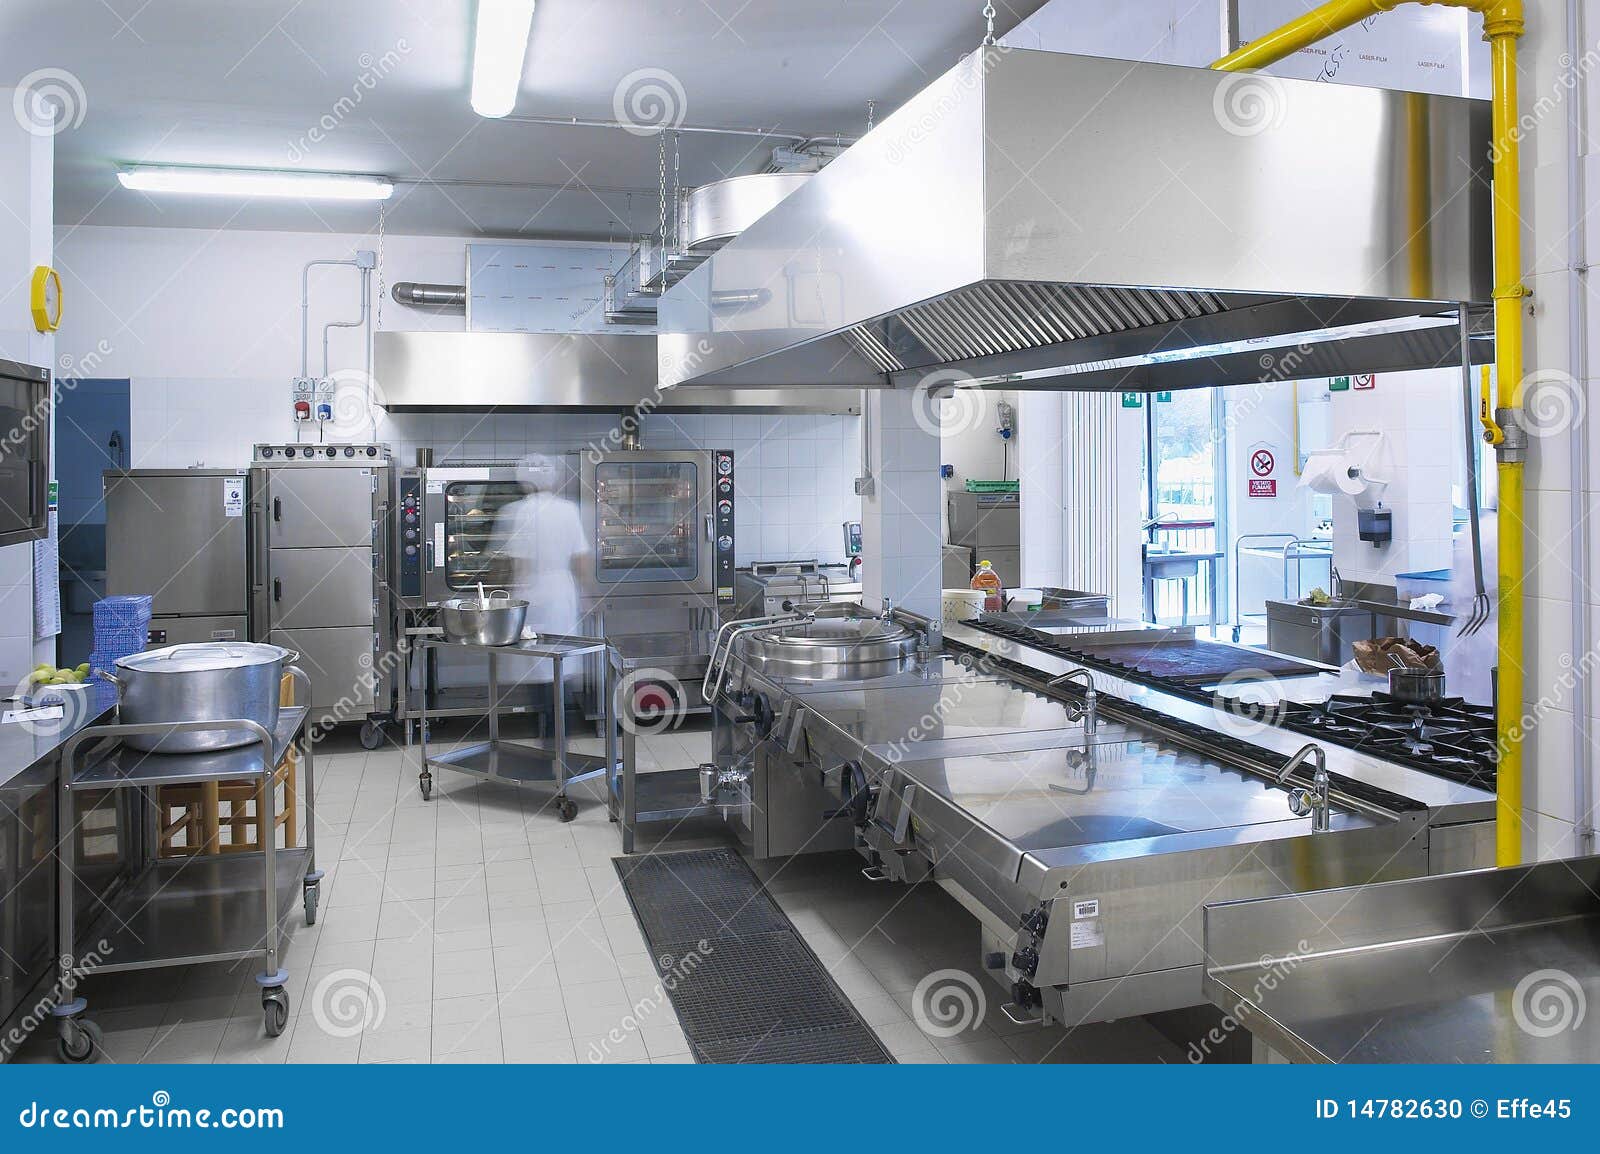 a kitchen of a restaurant